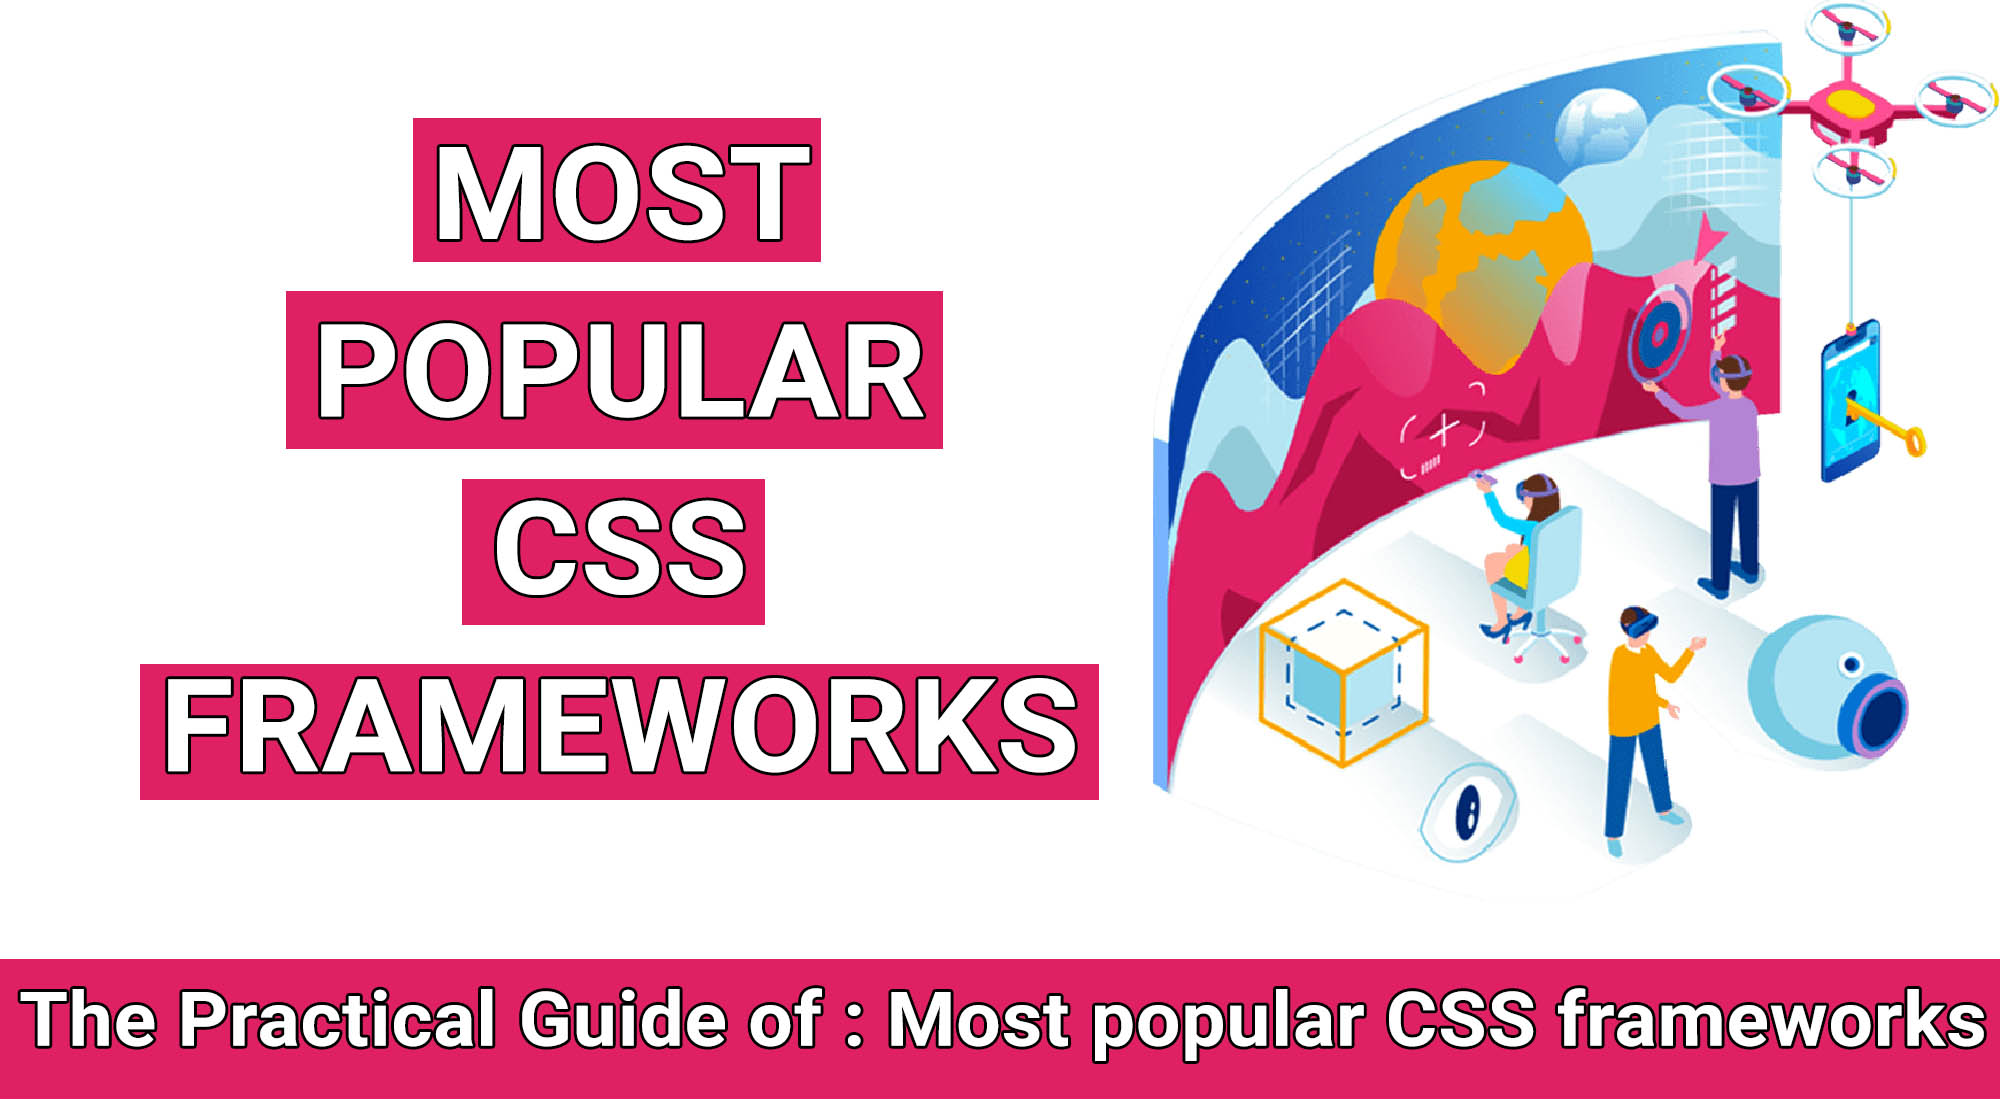 Most popular CSS frameworks